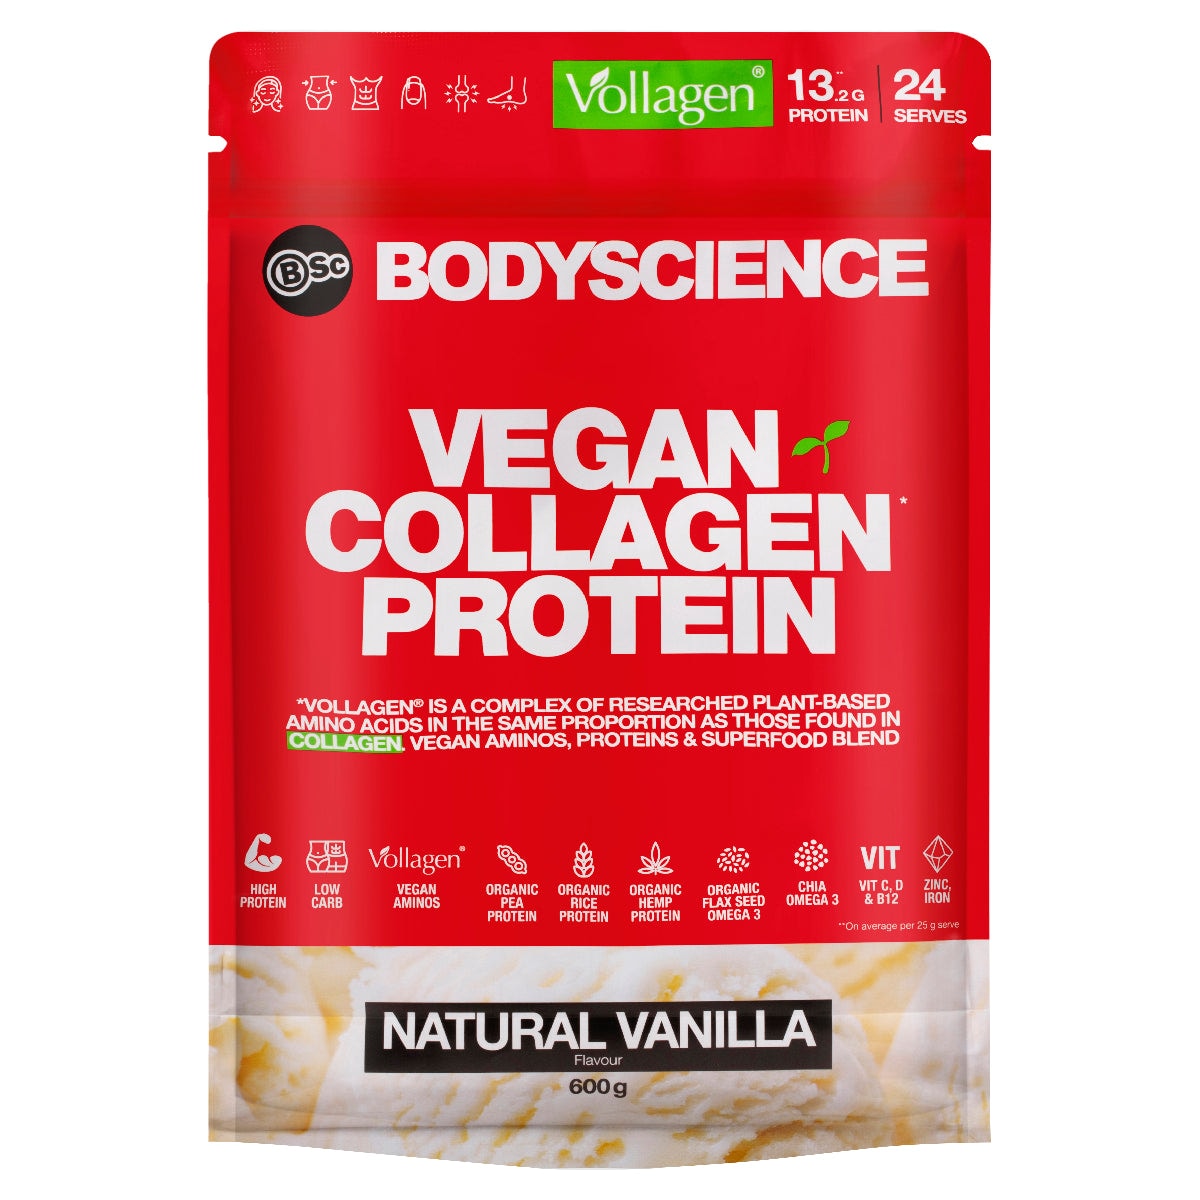 BSc Body Science Vegan Collagen Protein Natural Vanilla 600g Australia